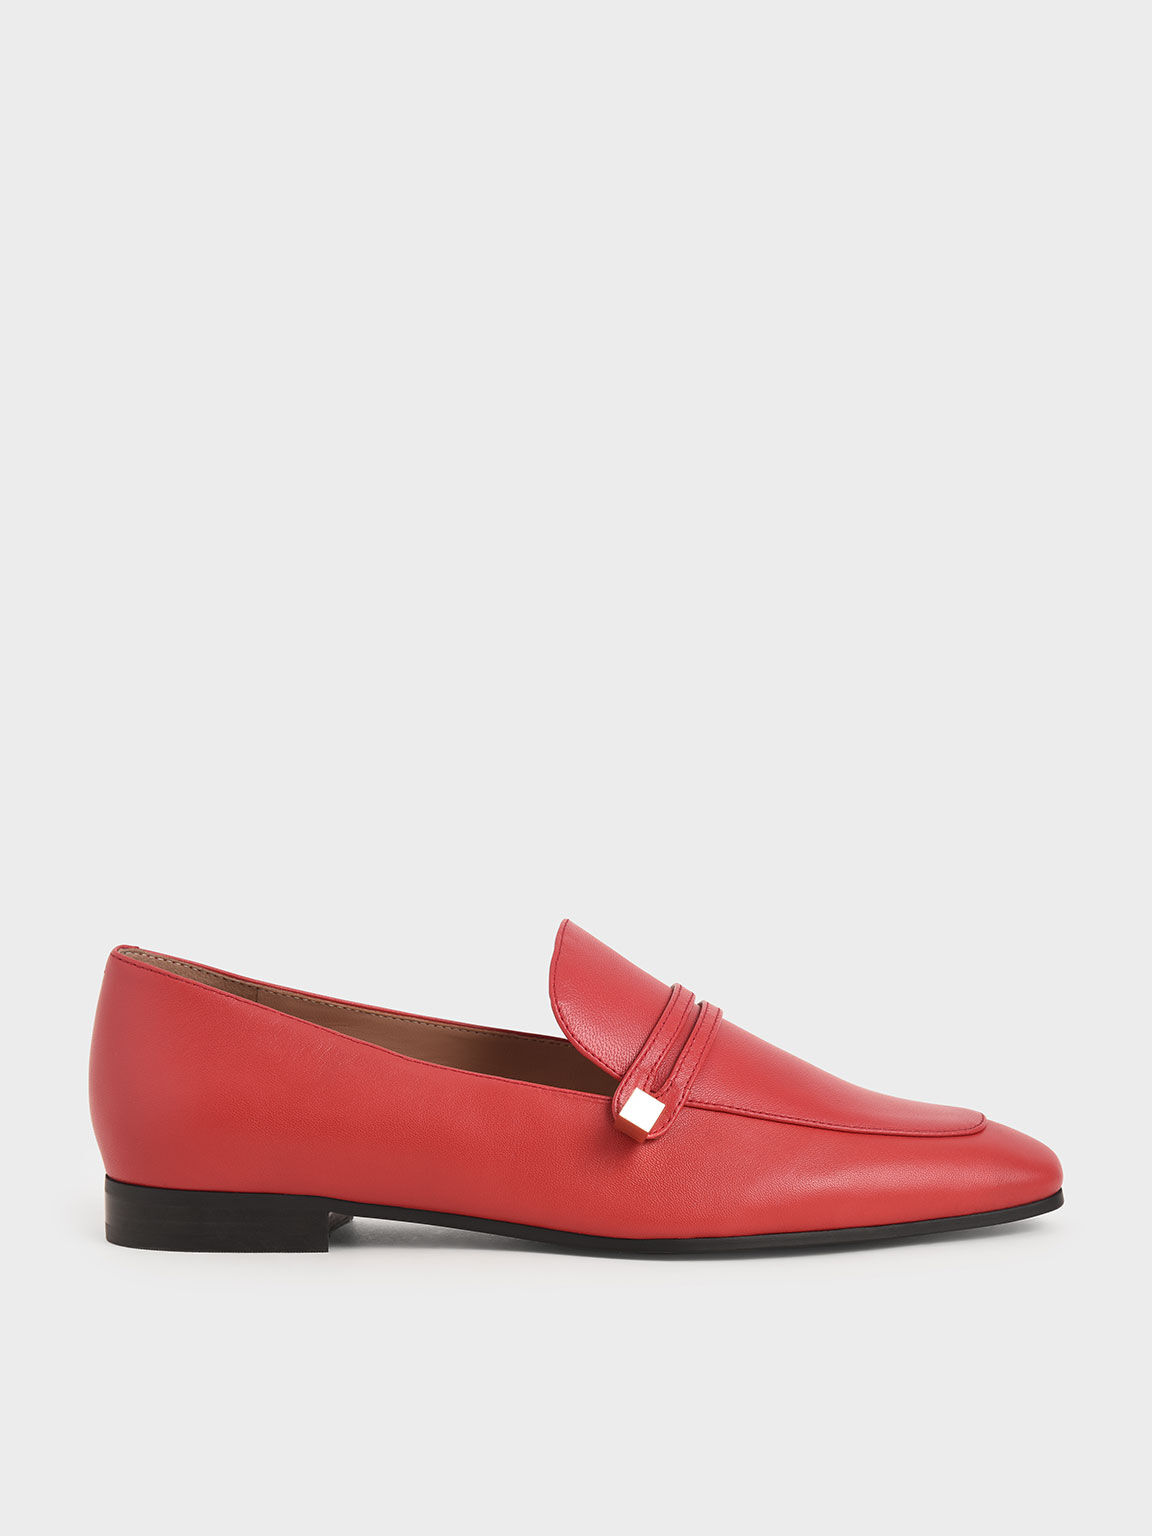 red leather slip on loafer